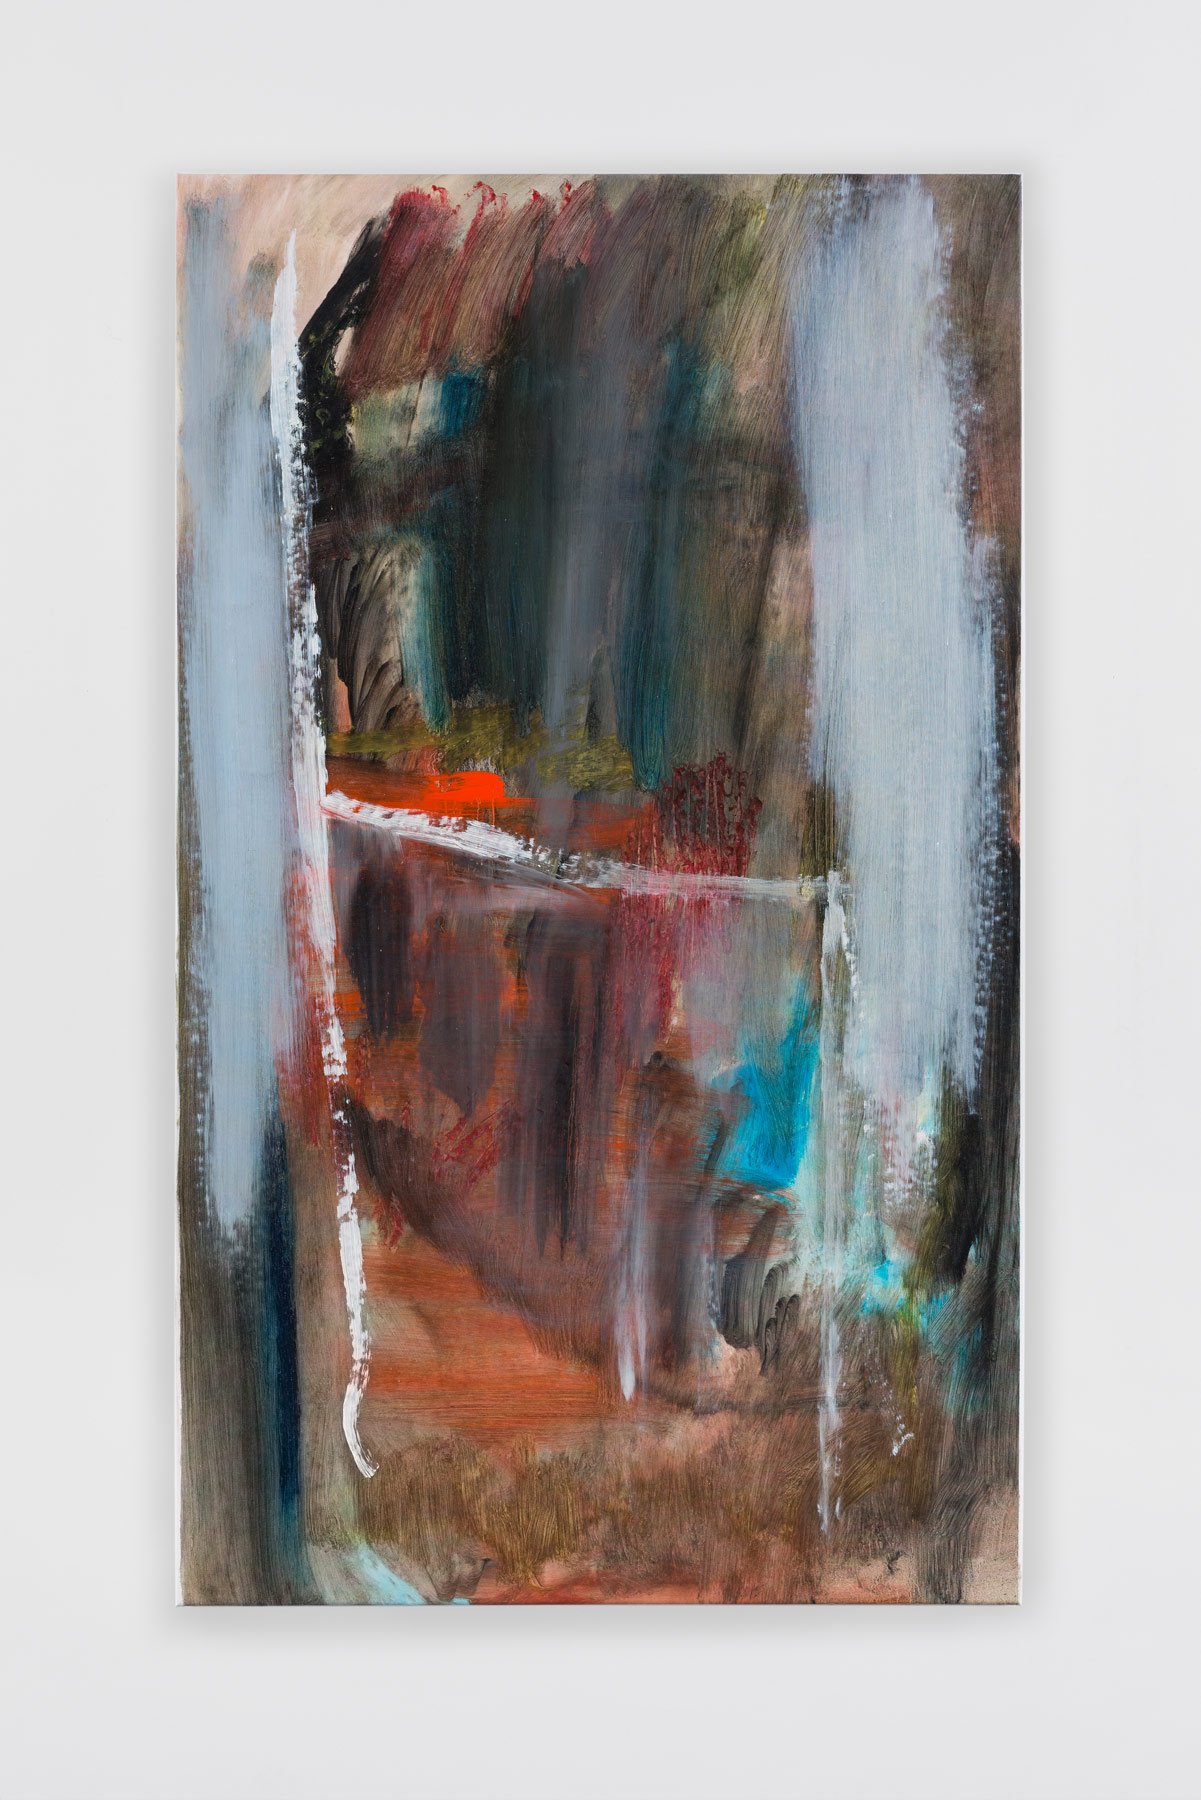 B01 - 0420, 2020, oil on canvas, 133 x 78 cm